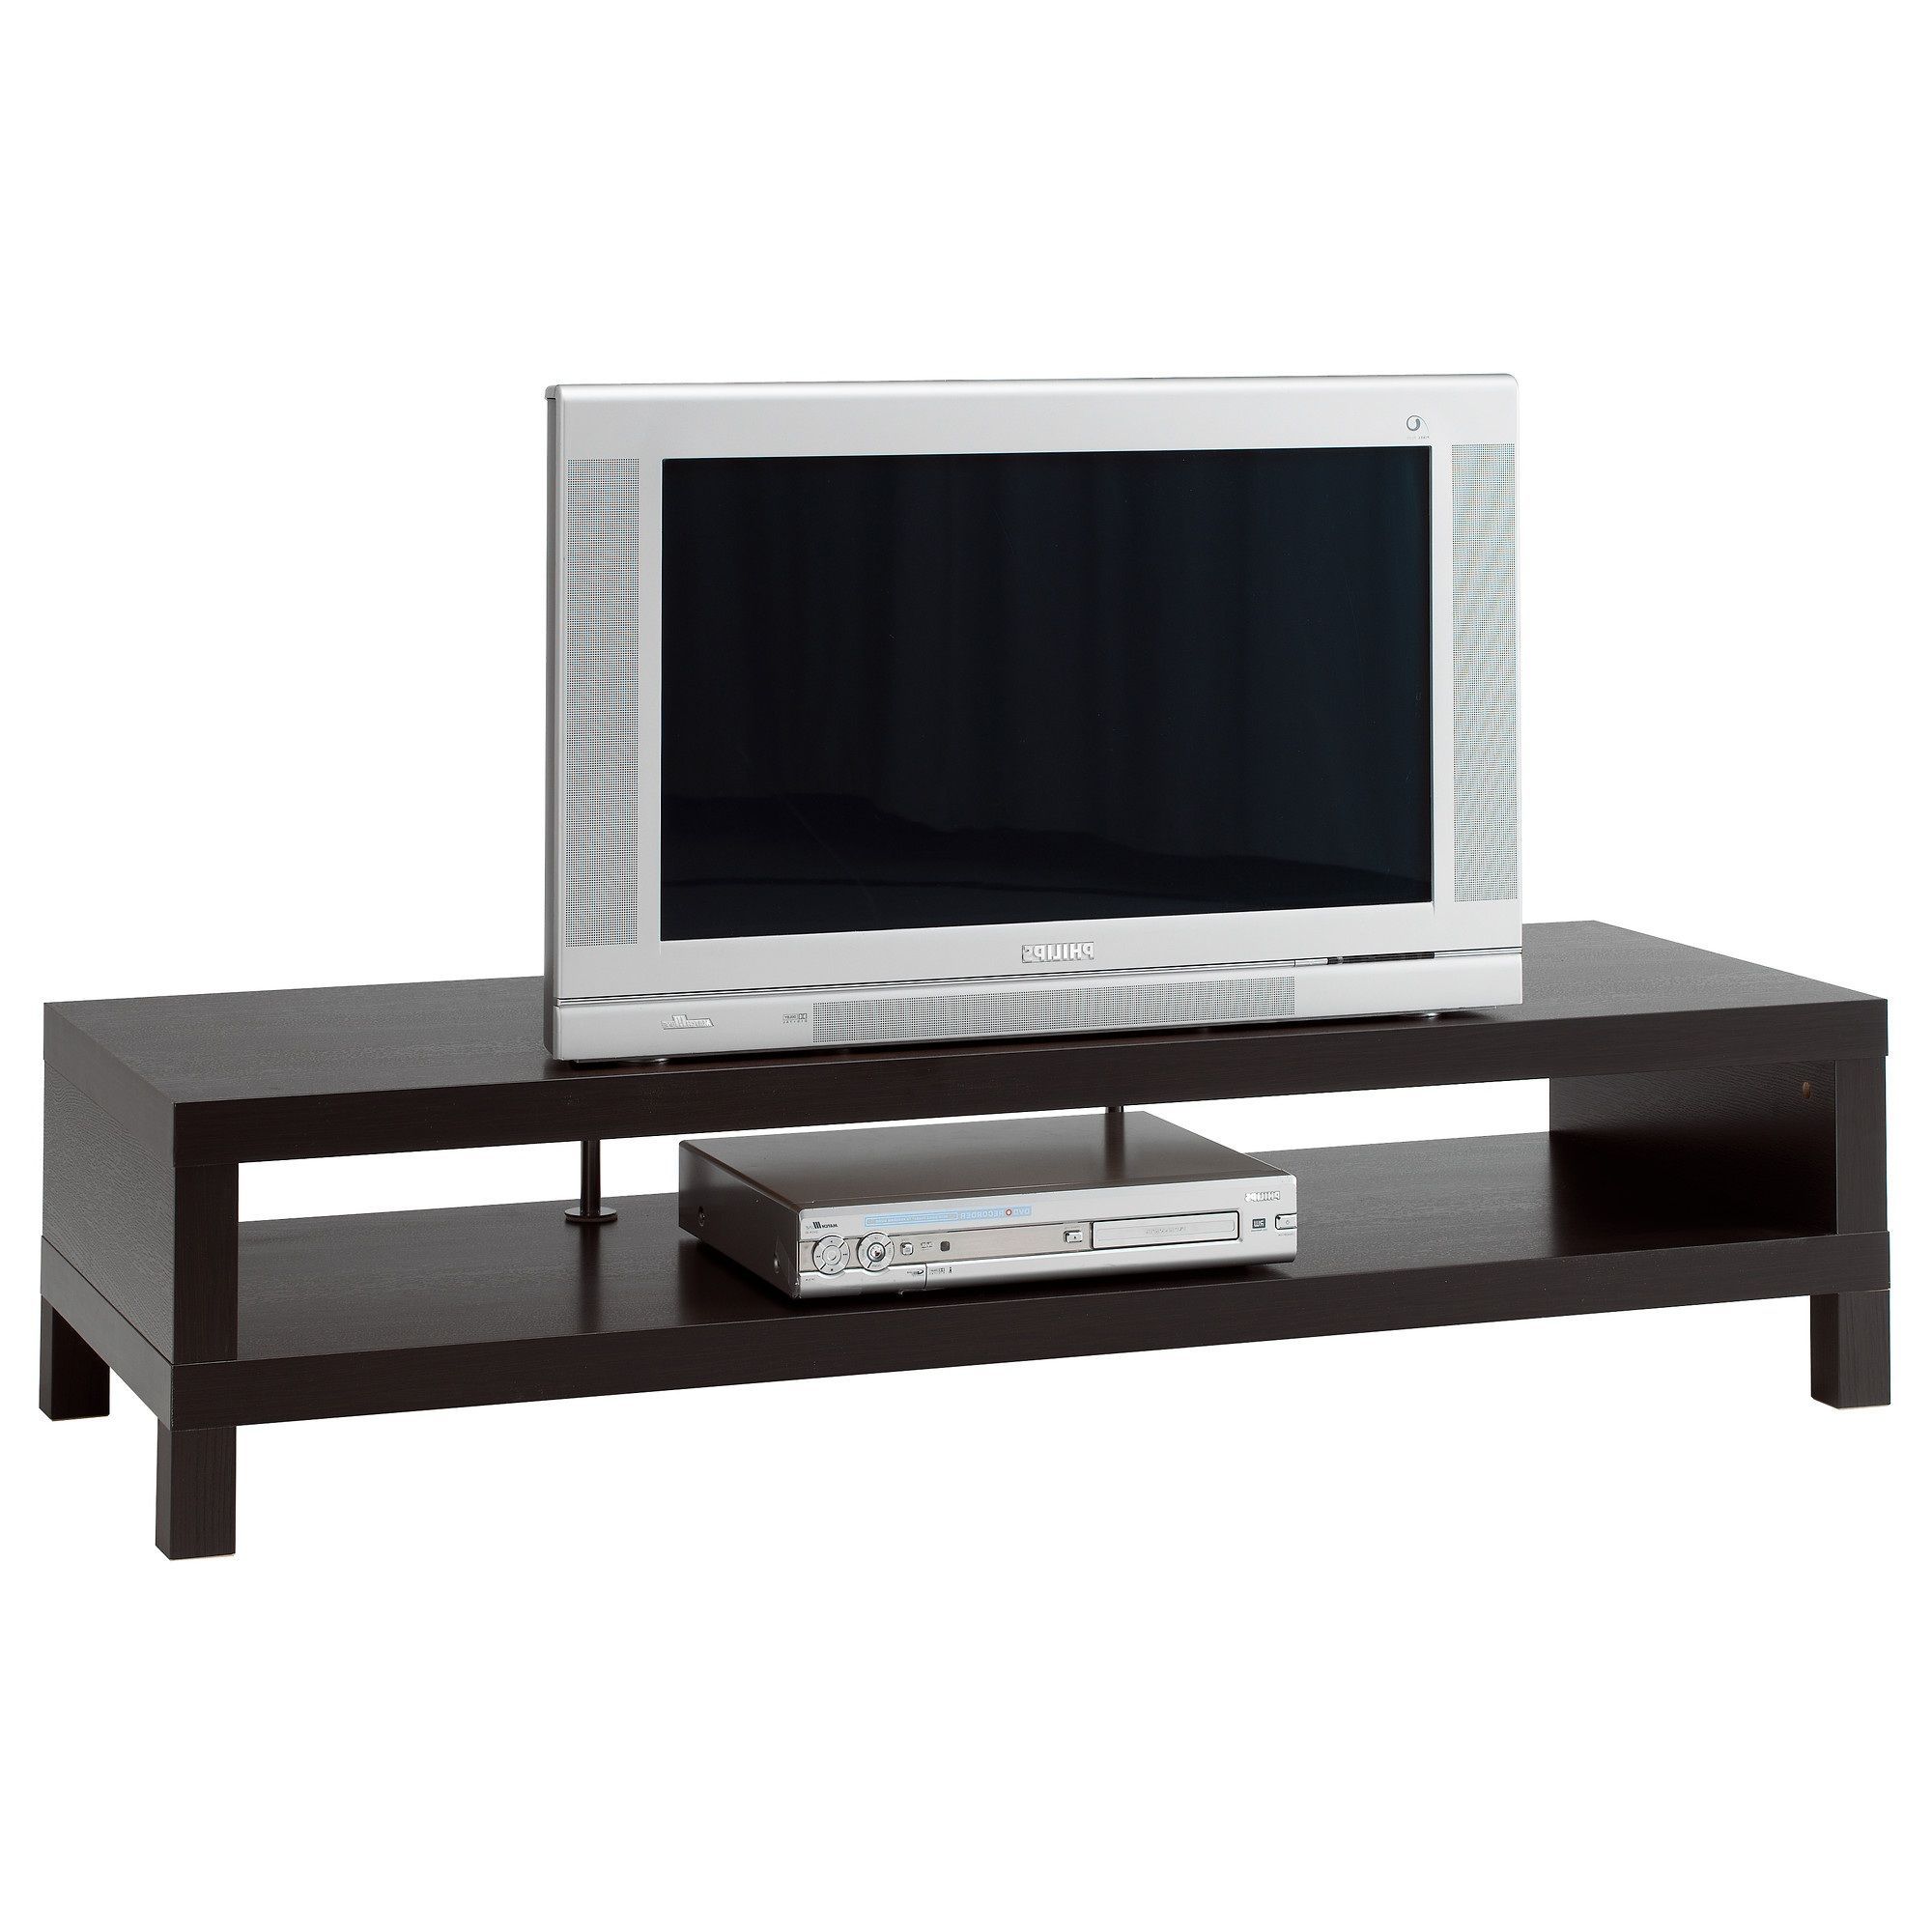 Marvellous Ikea Tv Stands | Ikea Tv Stand, Ikea Tv, Ikea Lack For Tv Console Table Ikea (View 11 of 15)